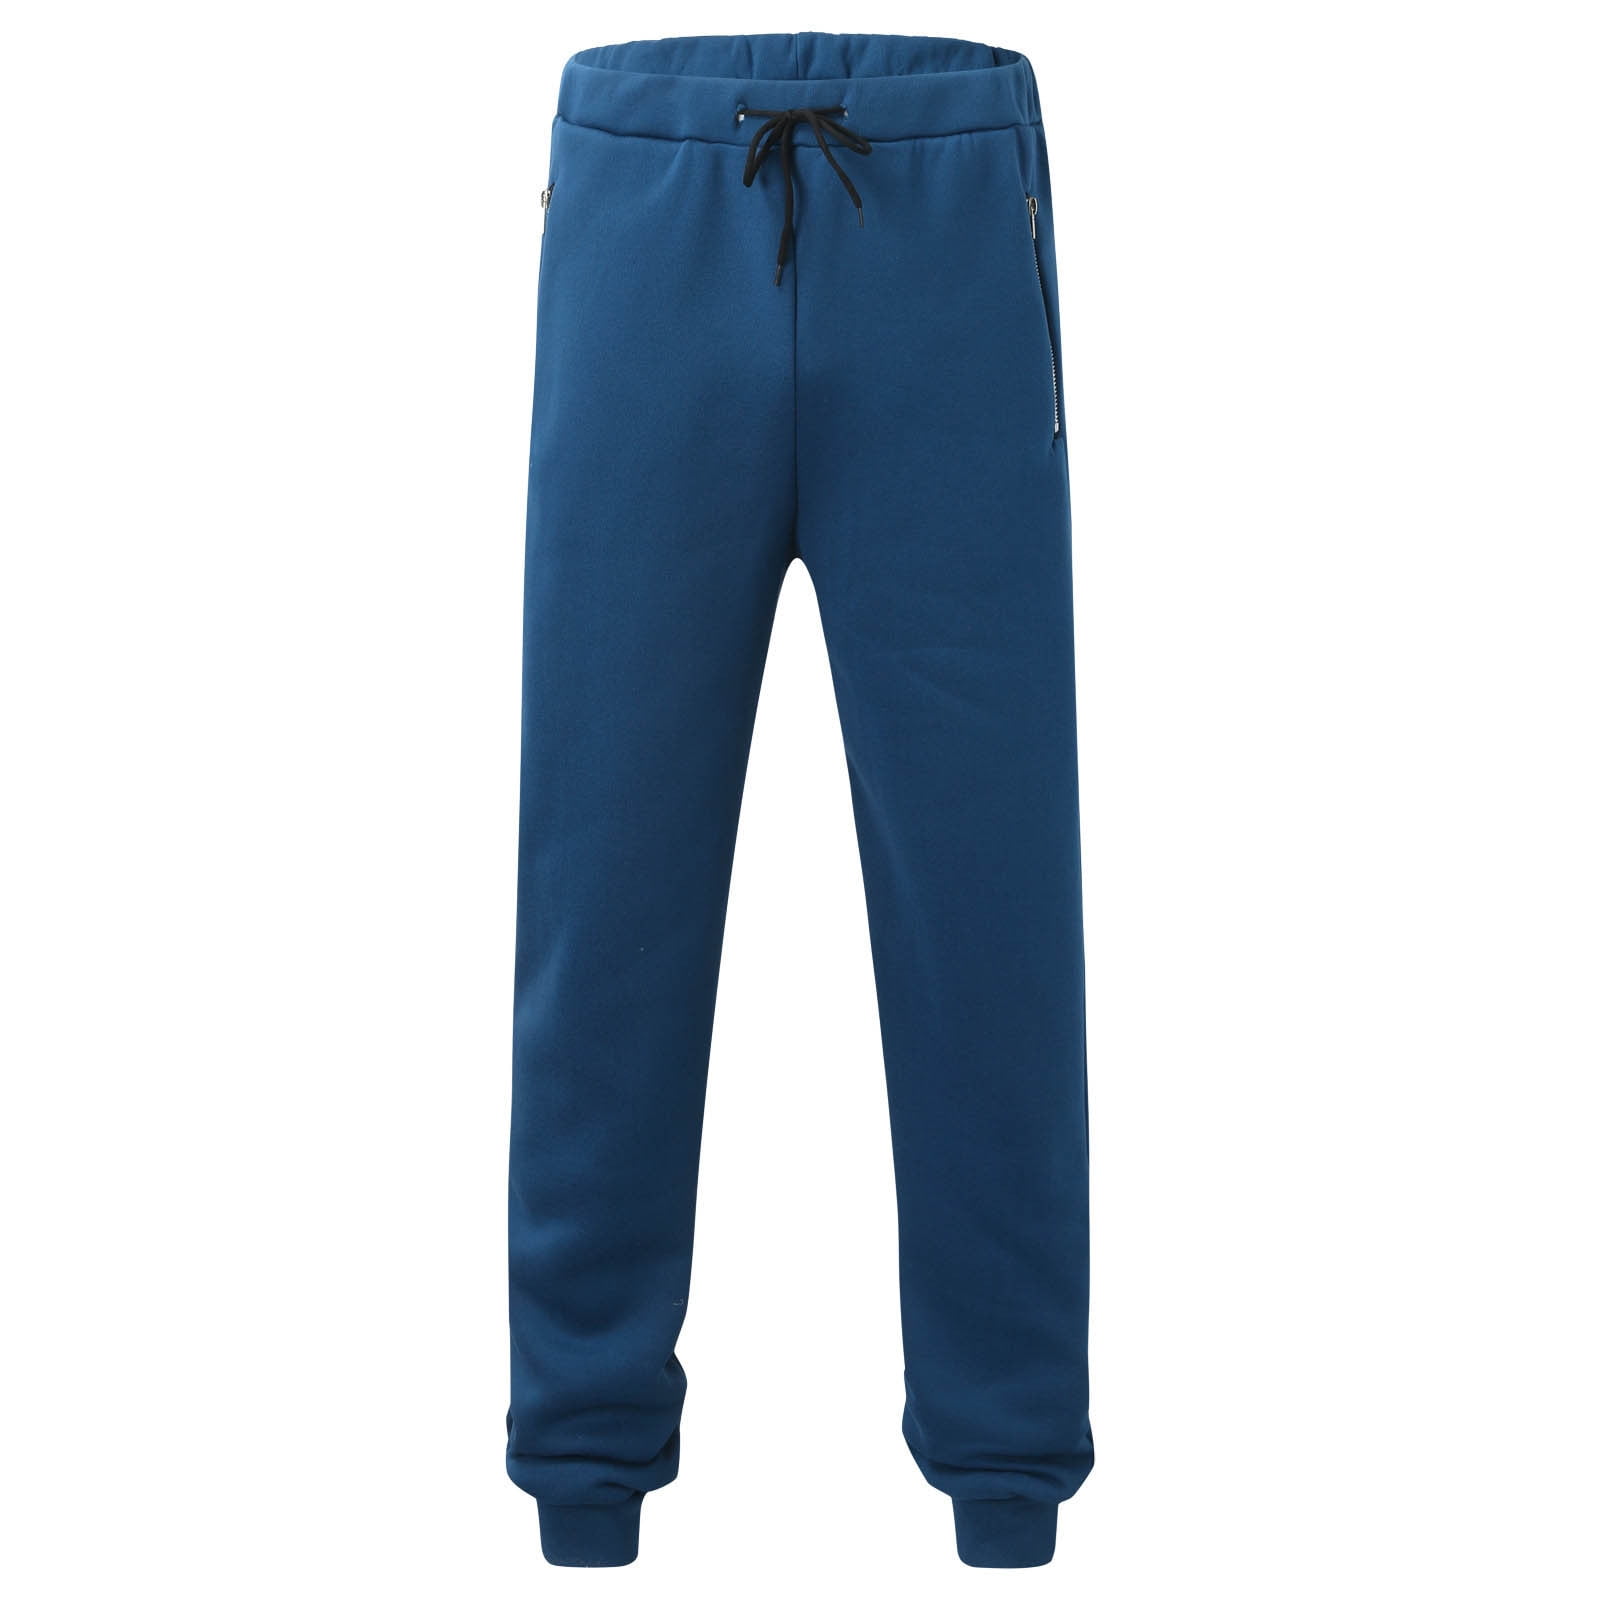 XFLWAM Sweatpants for Men Men's Active Basic Joggers Pants Outdoor Pocket  Drawstring Solid Color Sports Sweatpants Black M 